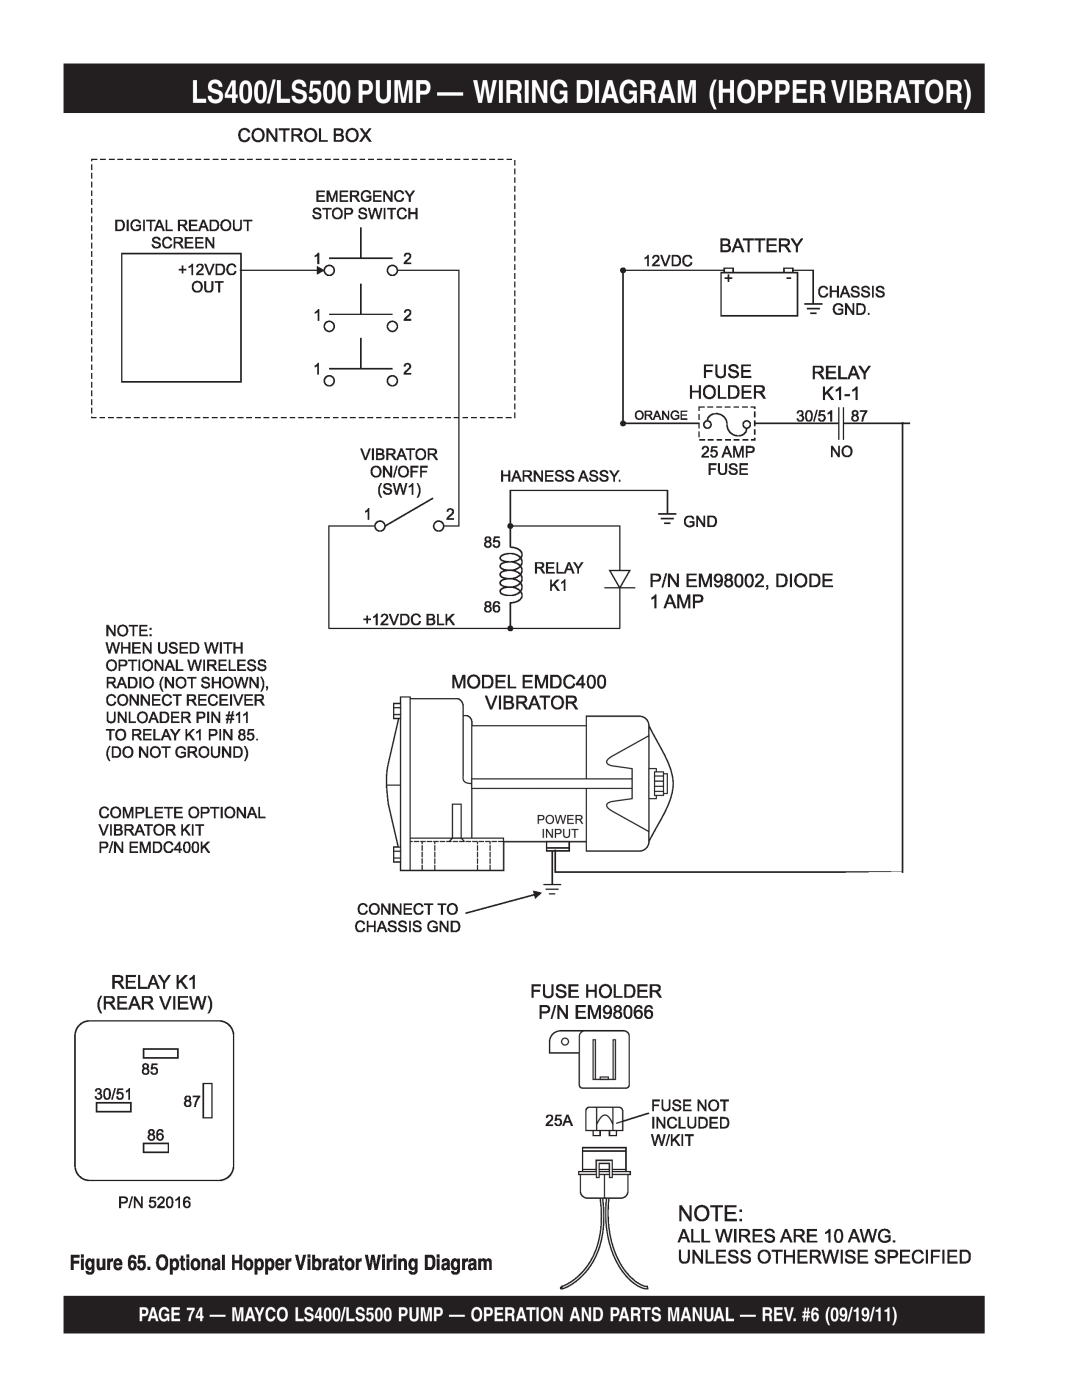 Multiquip manual LS400/LS500 PUMP - WIRING DIAGRAM HOPPER VIBRATOR, Optional Hopper Vibrator Wiring Diagram 